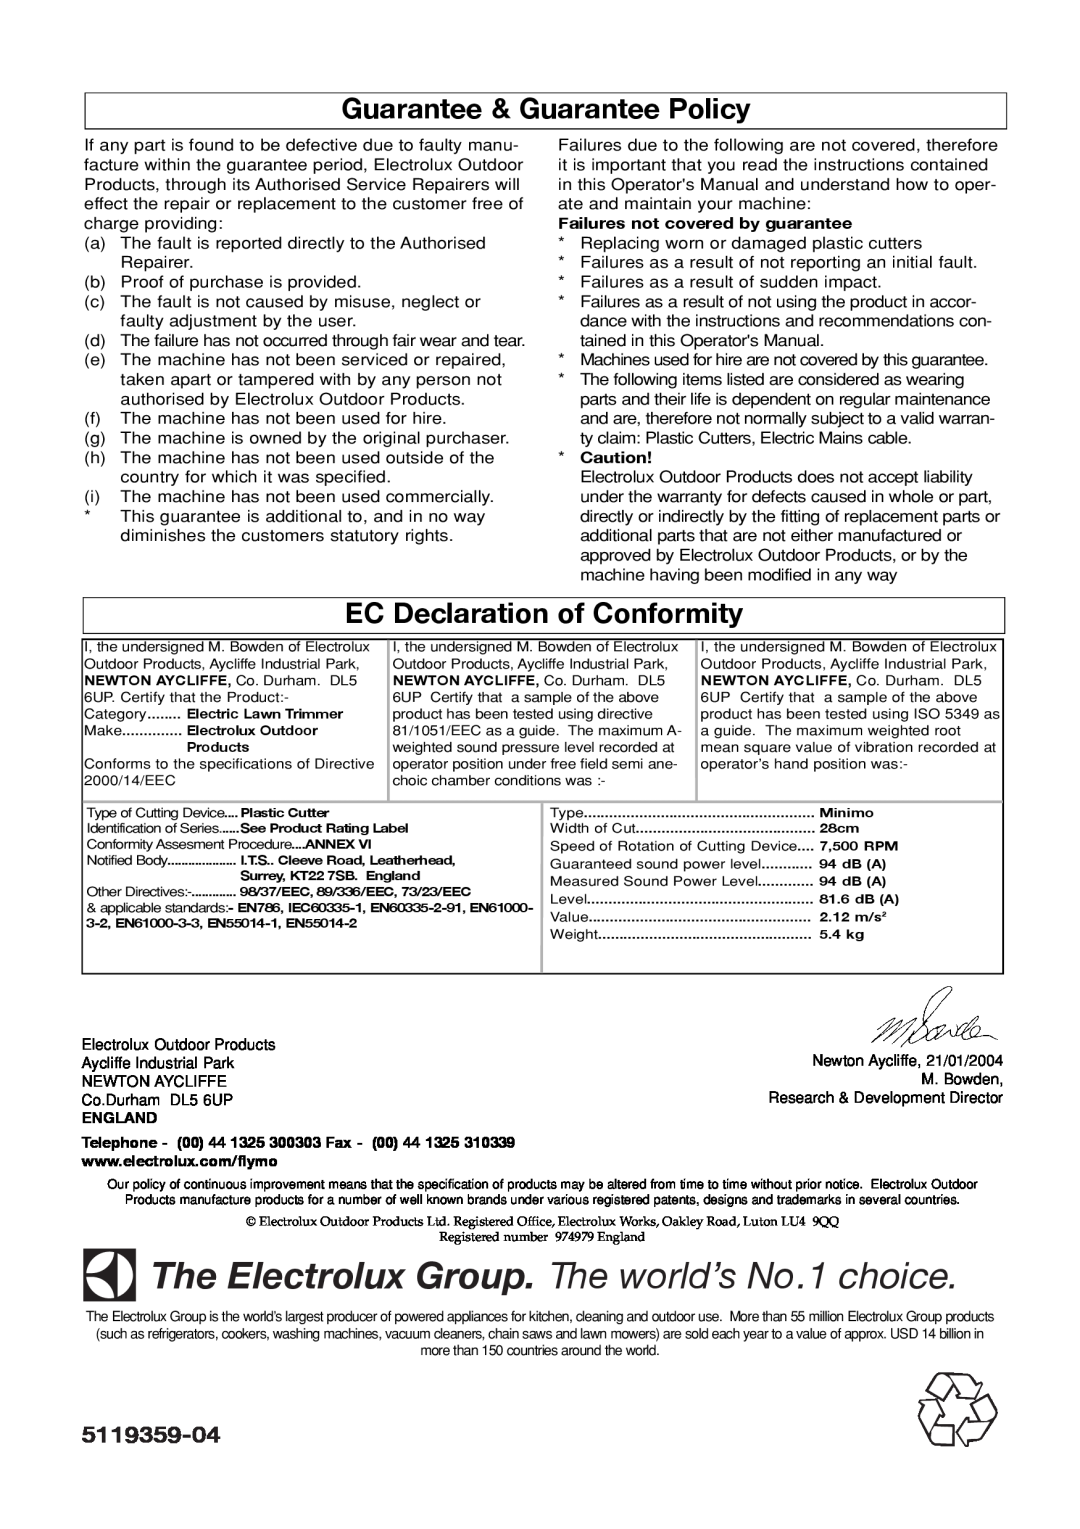 Flymo Electric Lawn Trimmer manual Guarantee & Guarantee Policy, EC Declaration of Conformity, 5119359-04 